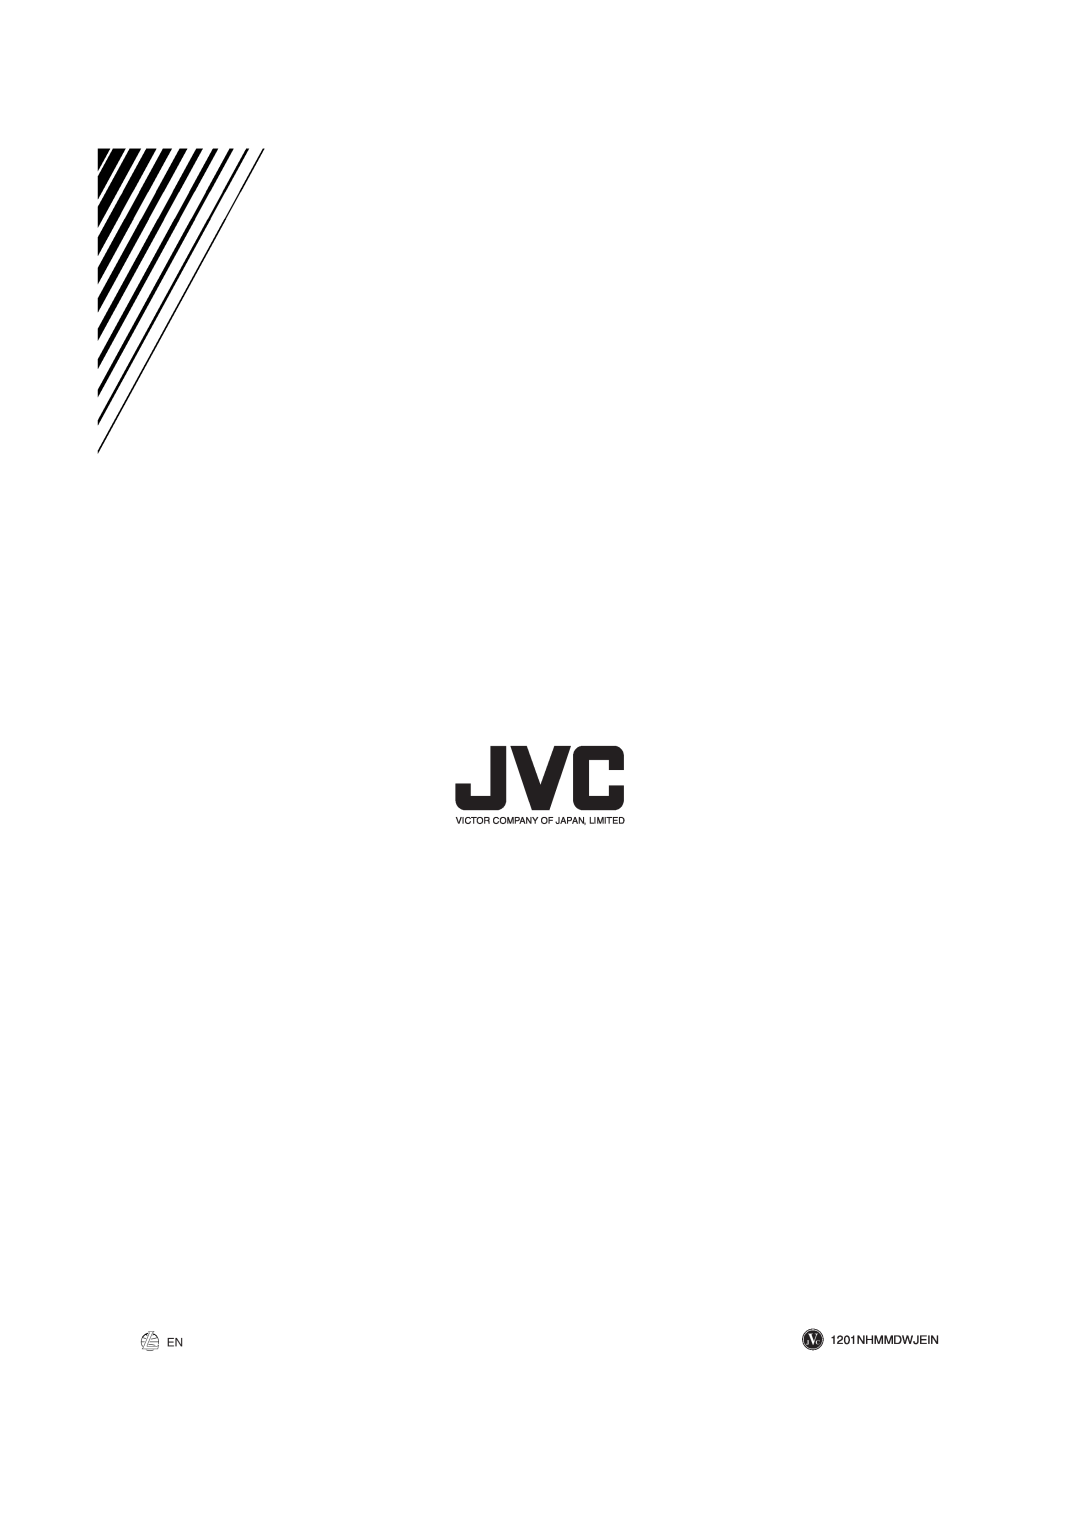 JVC RX-7020VBK manual 1201NHMMDWJEIN, Victor Company Of Japan, Limited 